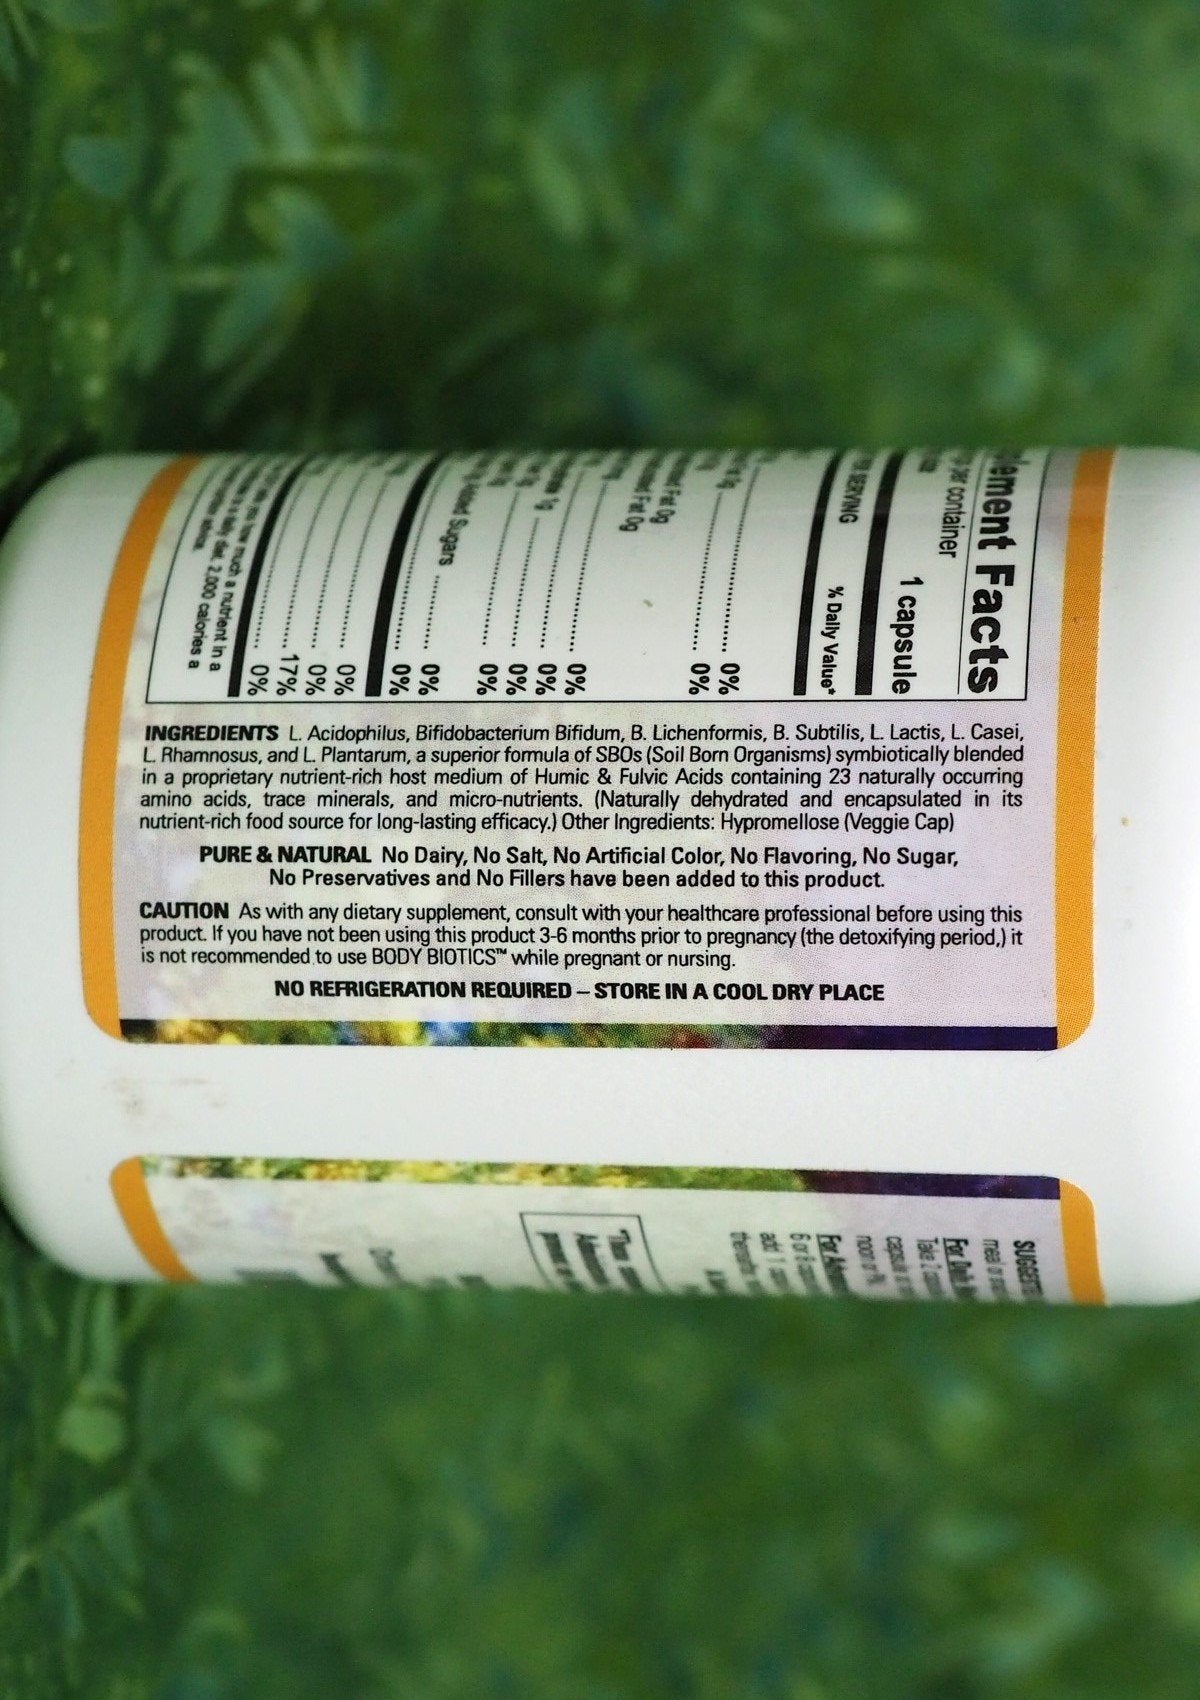 Body Biotics Soil-based Probiotic Consortia in a 90 capsule bottle